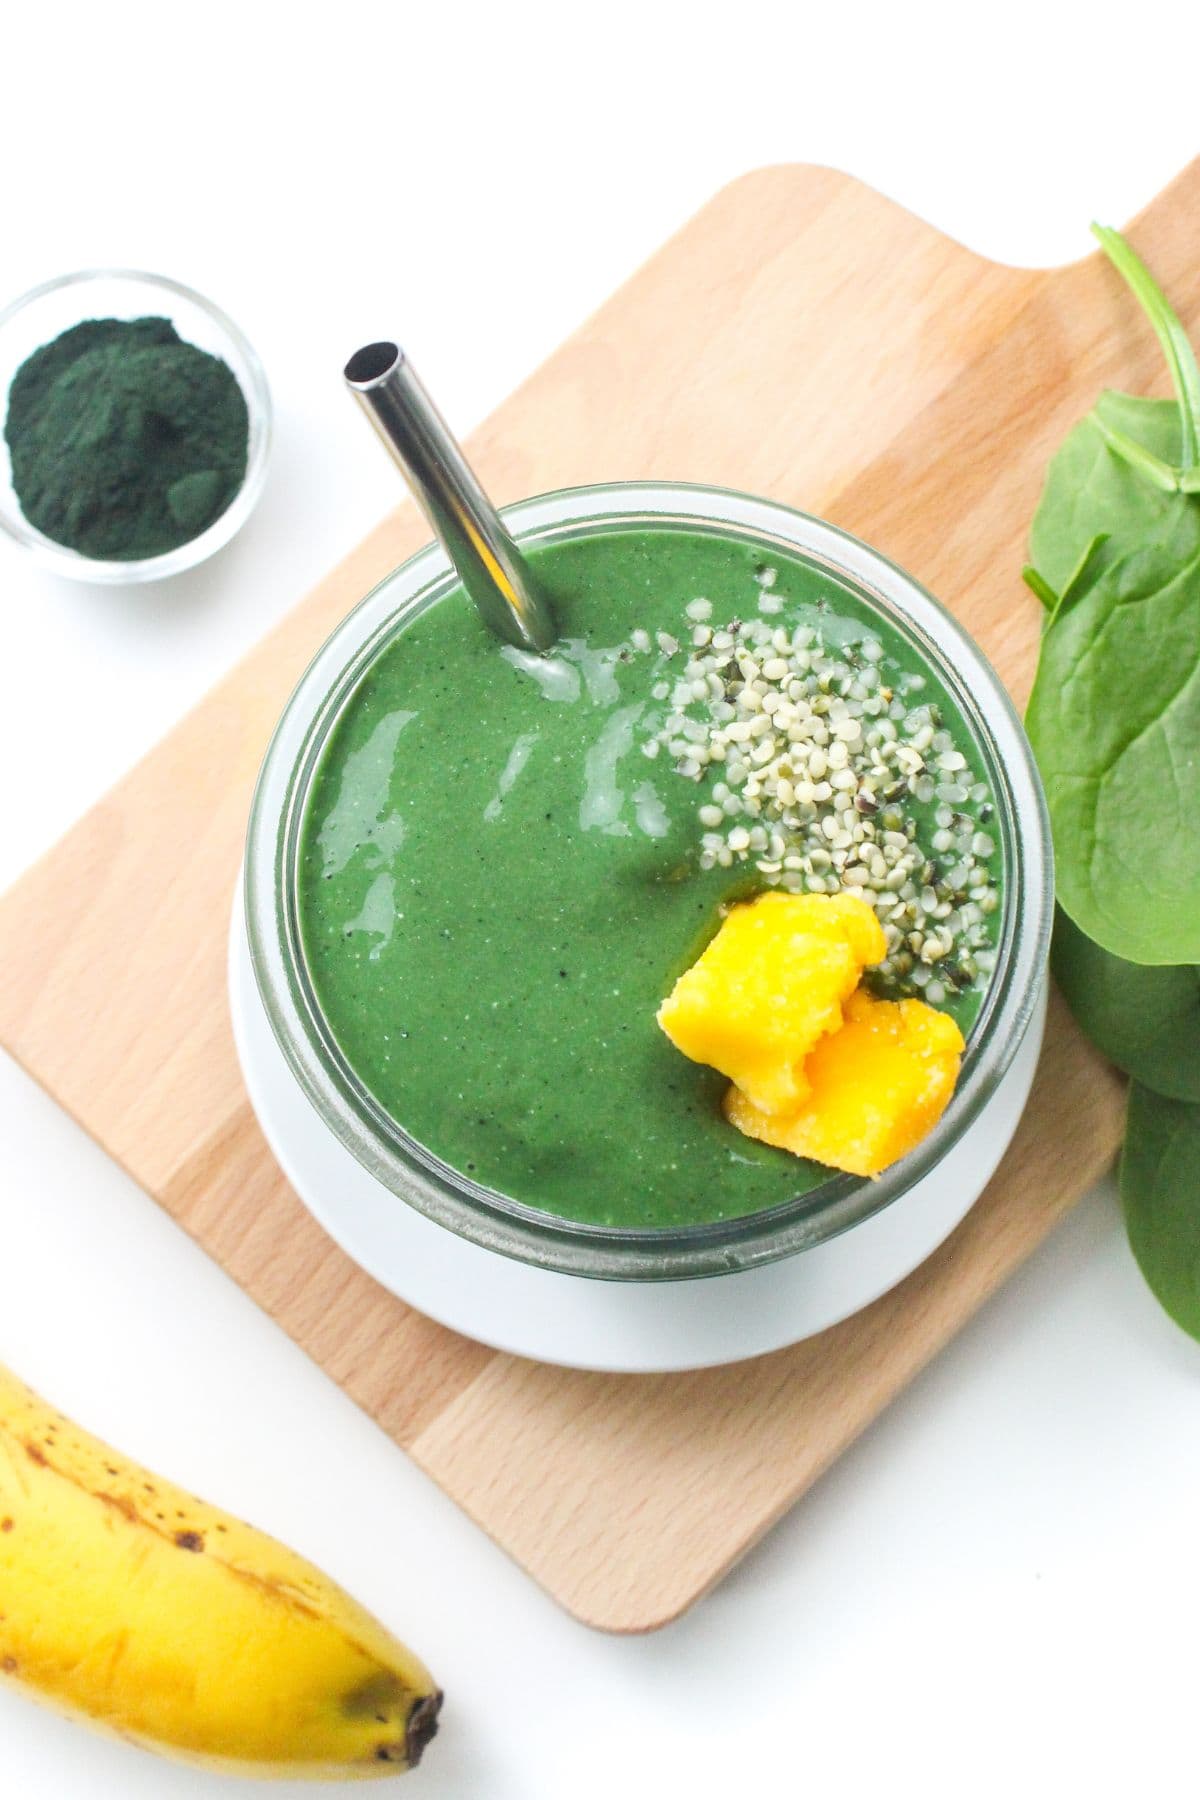 green smoothie with spirulina powder and mango